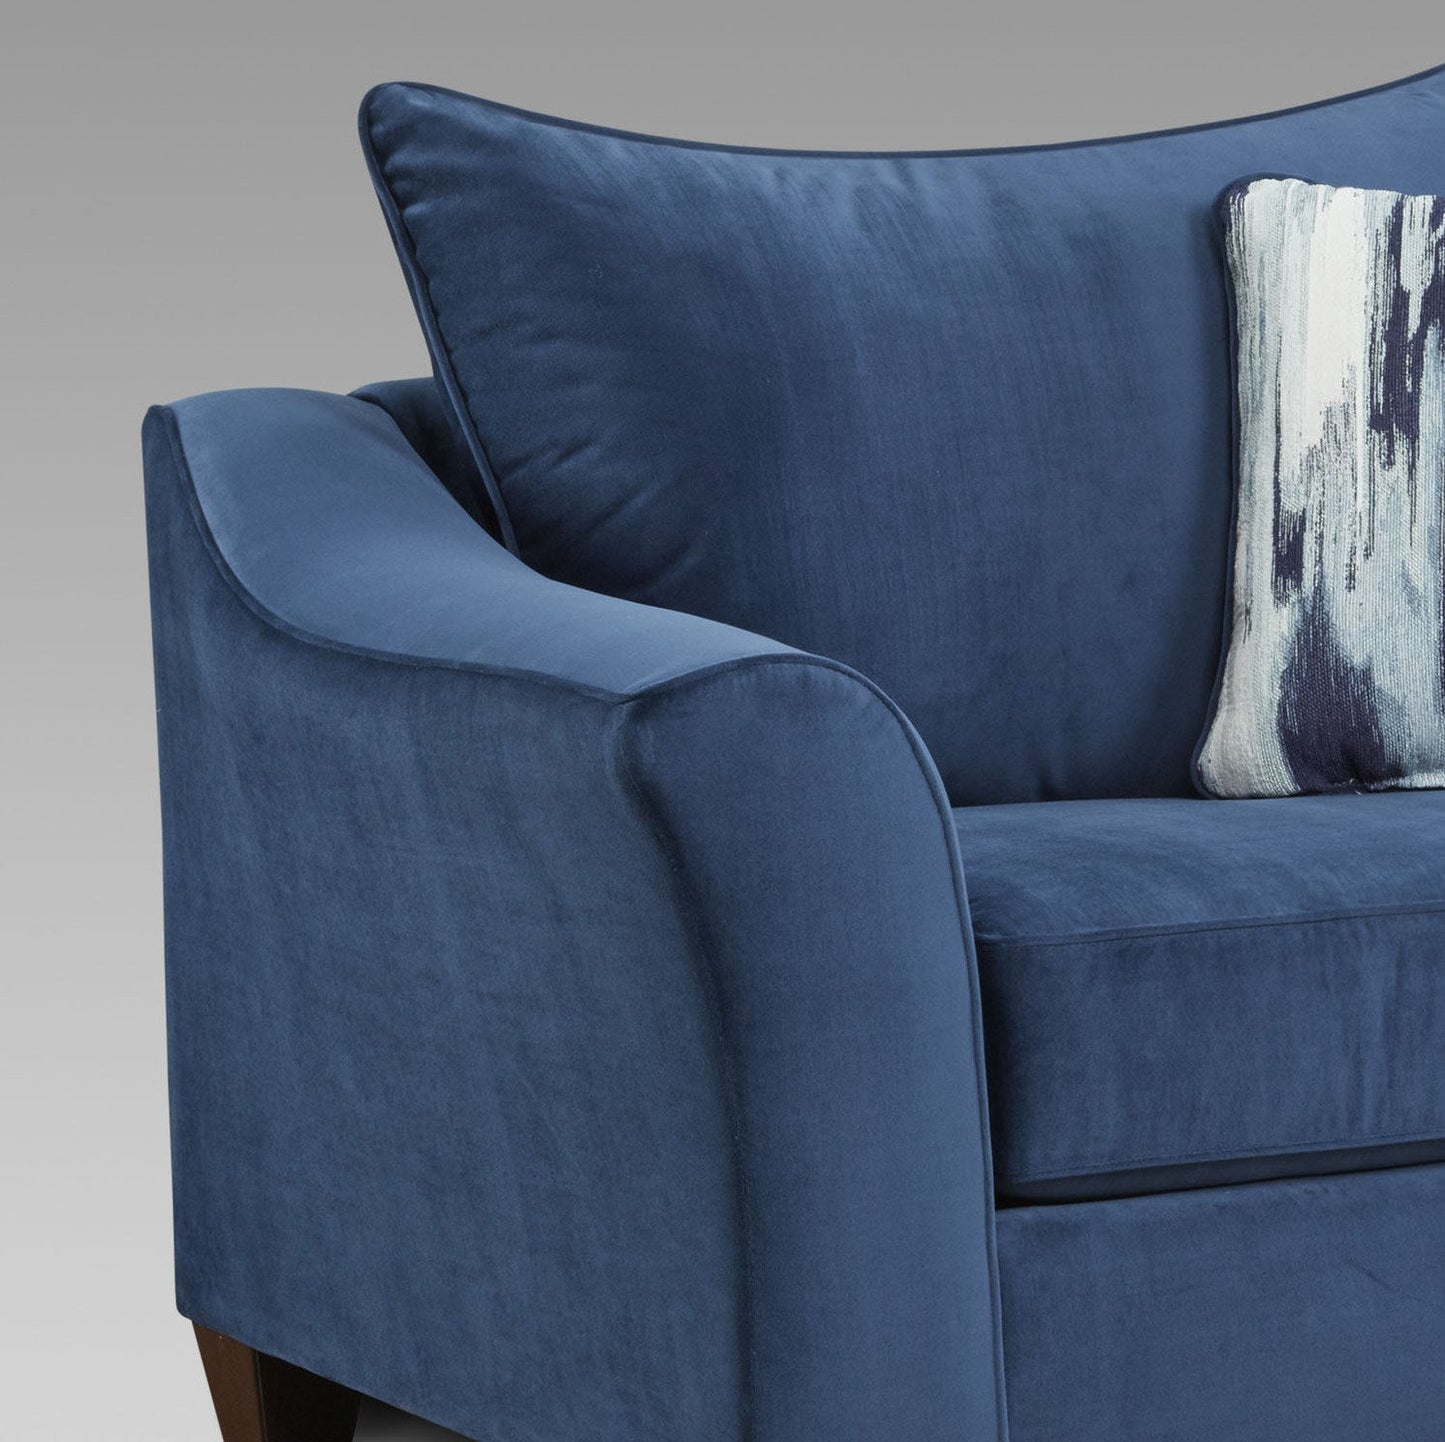 Camero Fabric Pillowback Sofa in Navy Blue